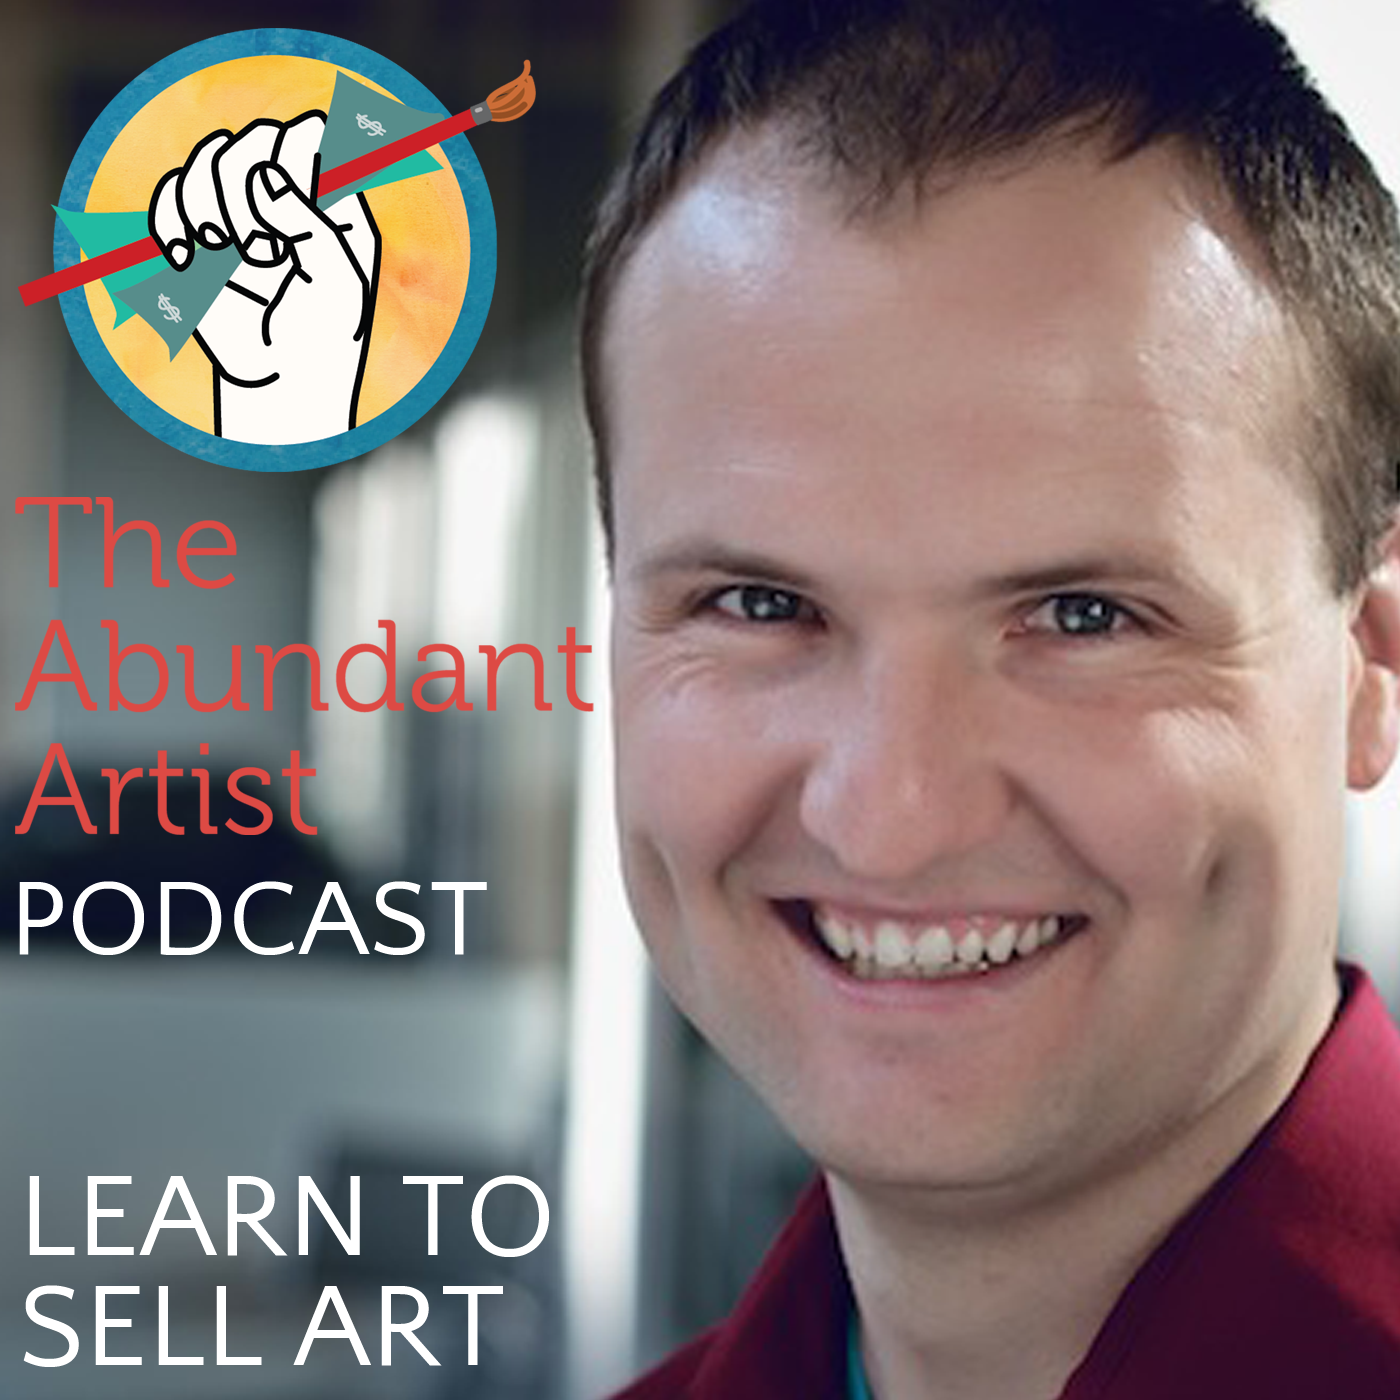 Introducing The Abundant Artist Podcast